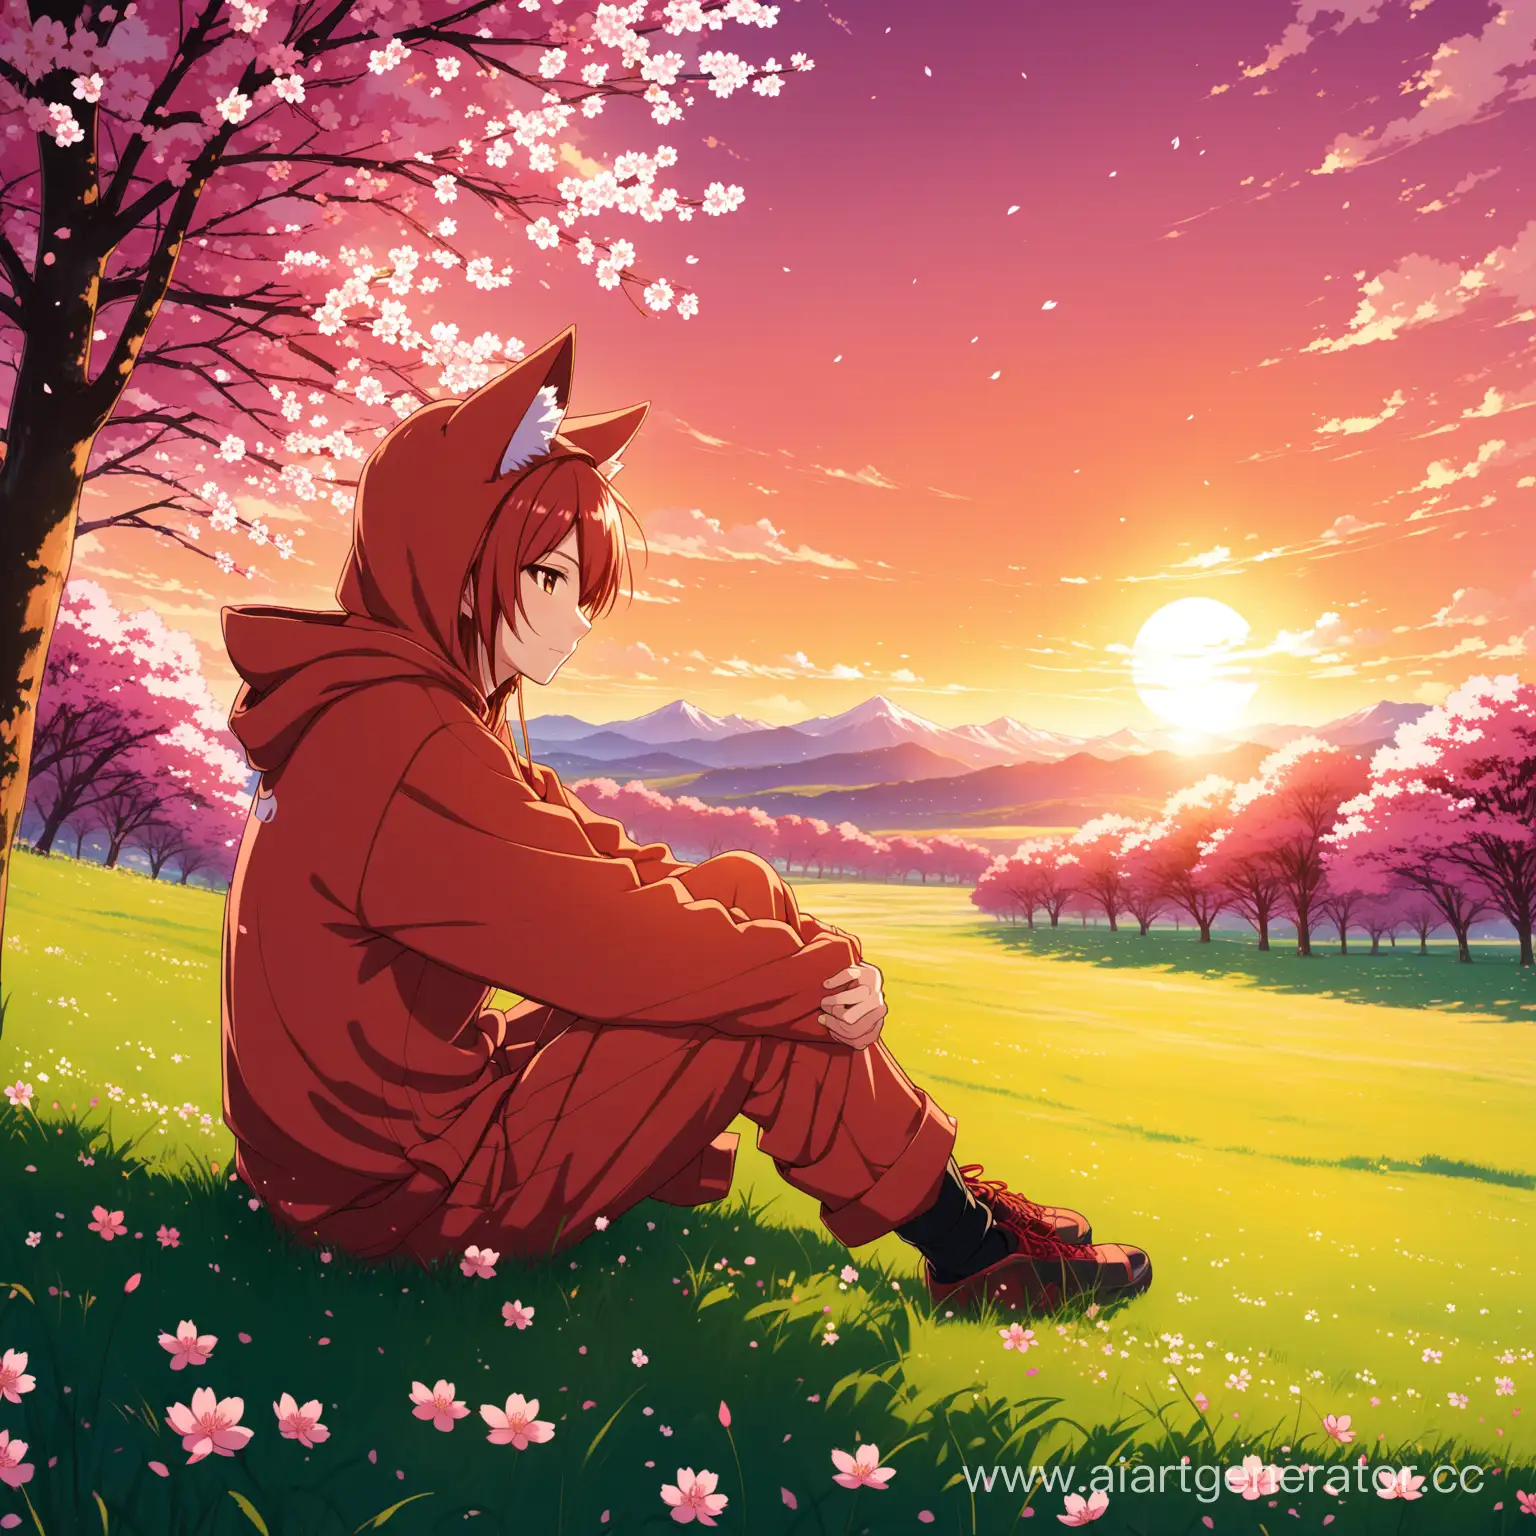 Sakura-Anime-Boy-in-Fox-Hoodie-Watching-Crimson-Sunset-in-Spring-Meadow